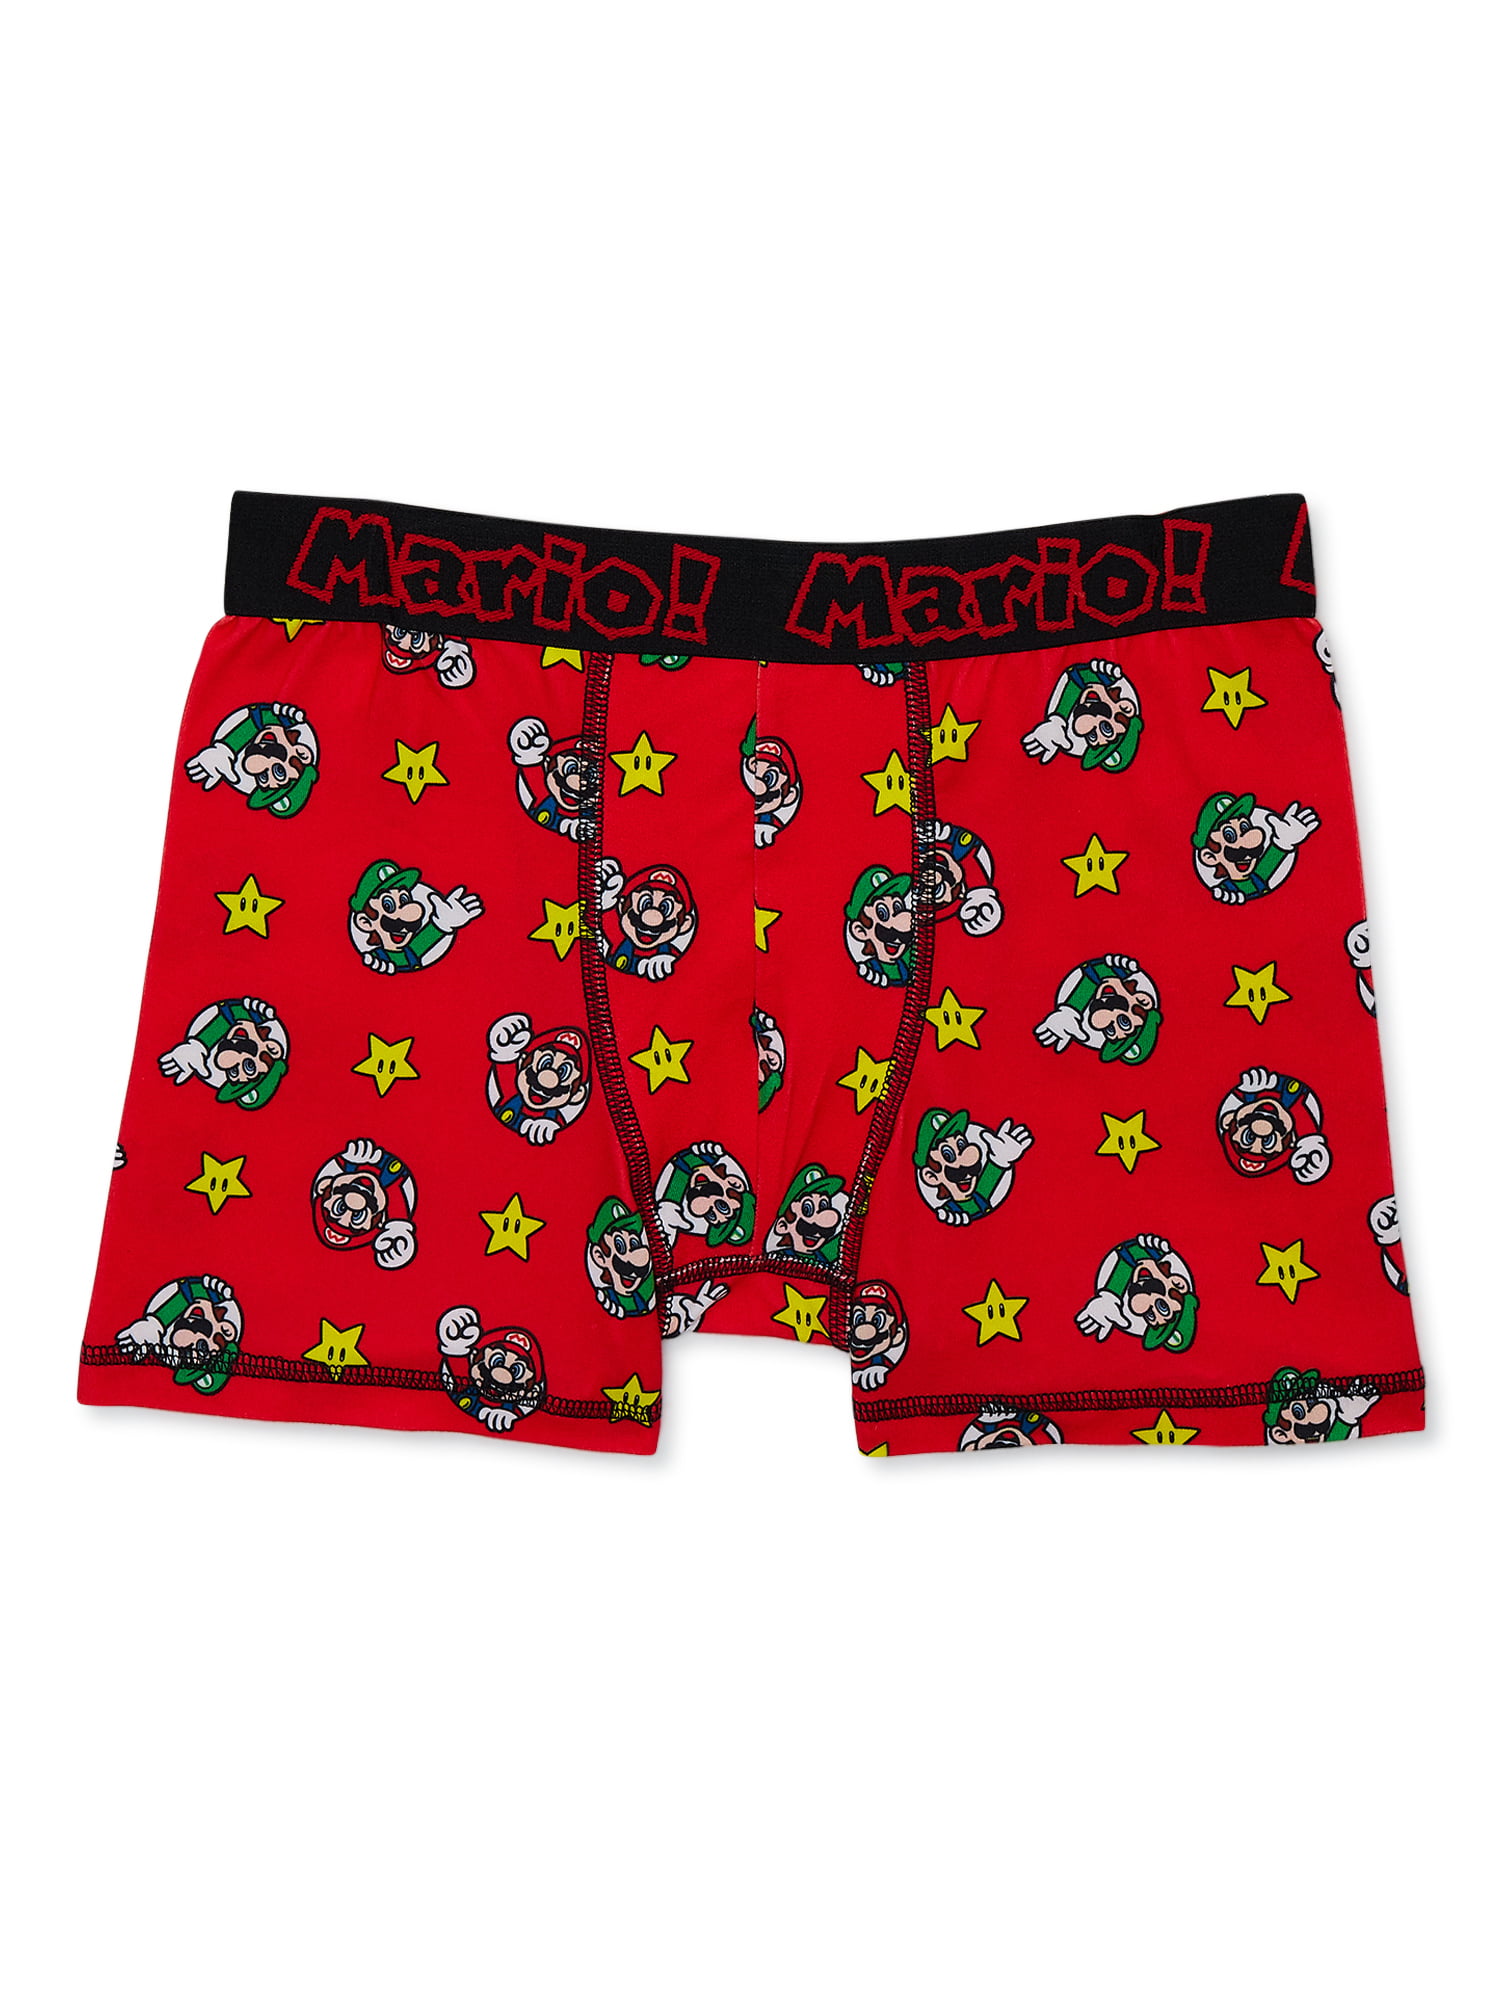 Mario Bros. Boys Boxer Brief Underwear, 4-Pack, Sizes 4-14